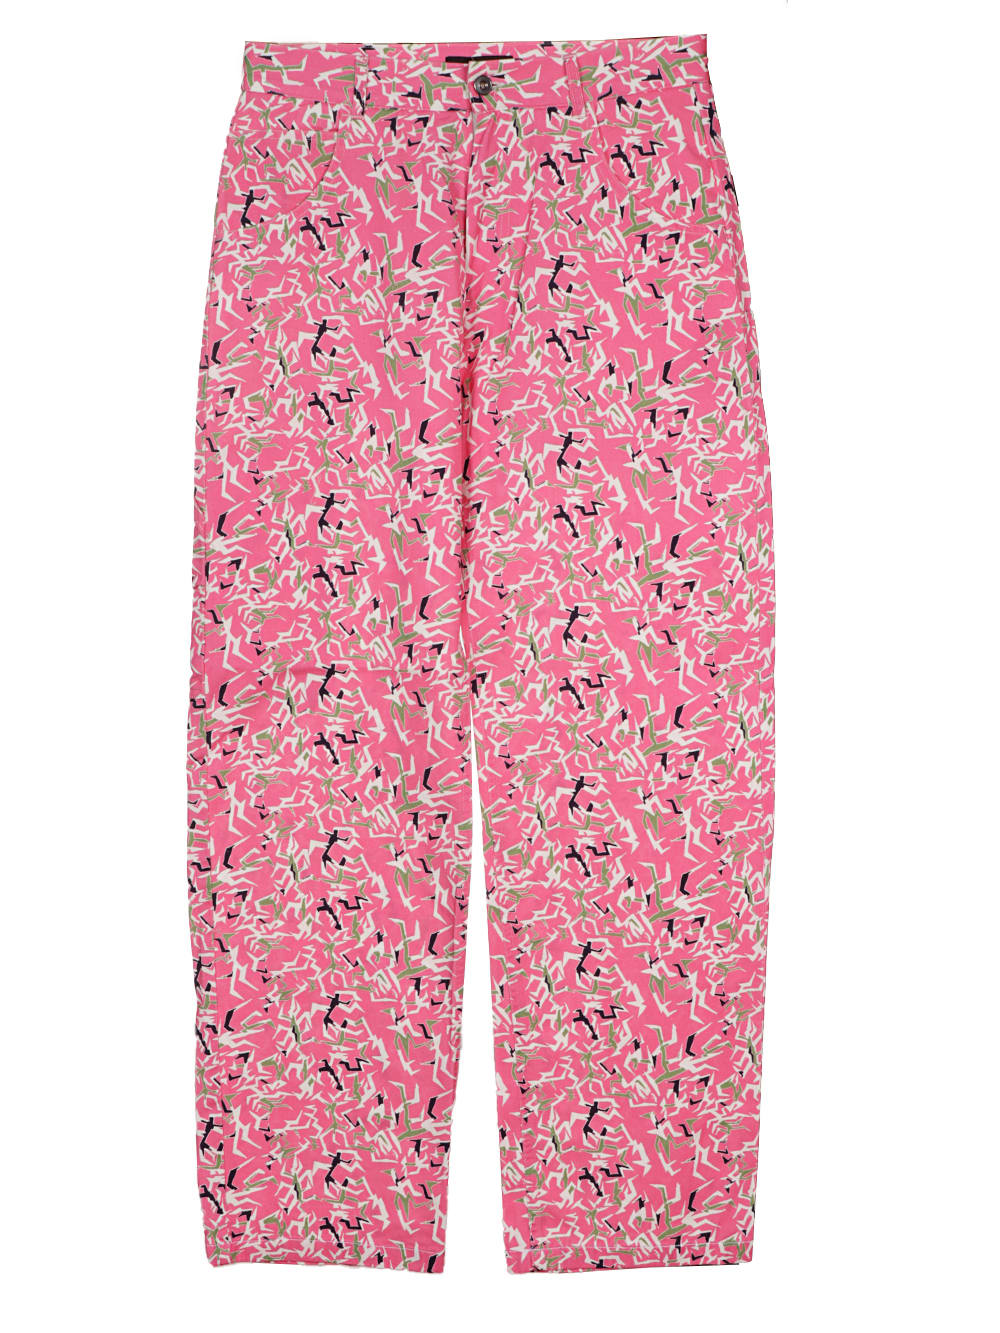 PACCBET Workwear Floral Pants